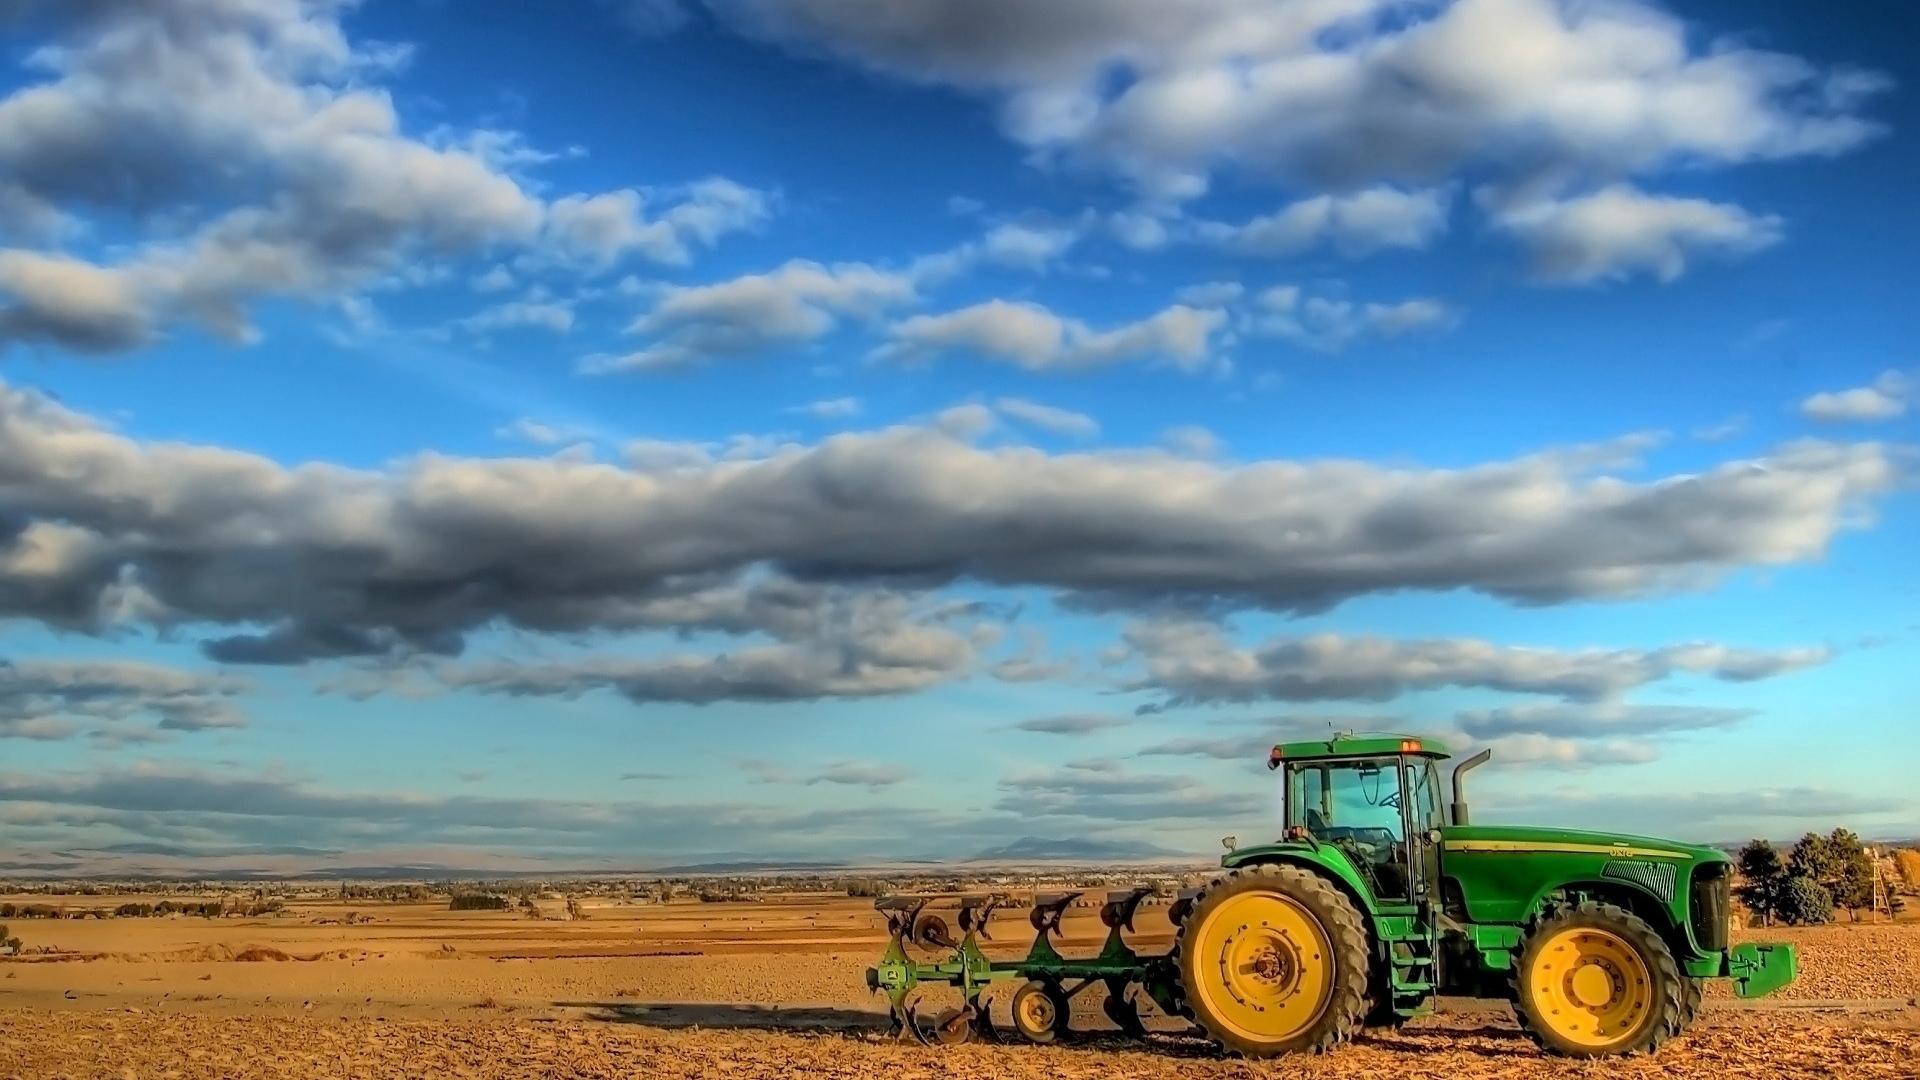 Download wallpaper 1920x1080 tractor, field, plowing, clouds